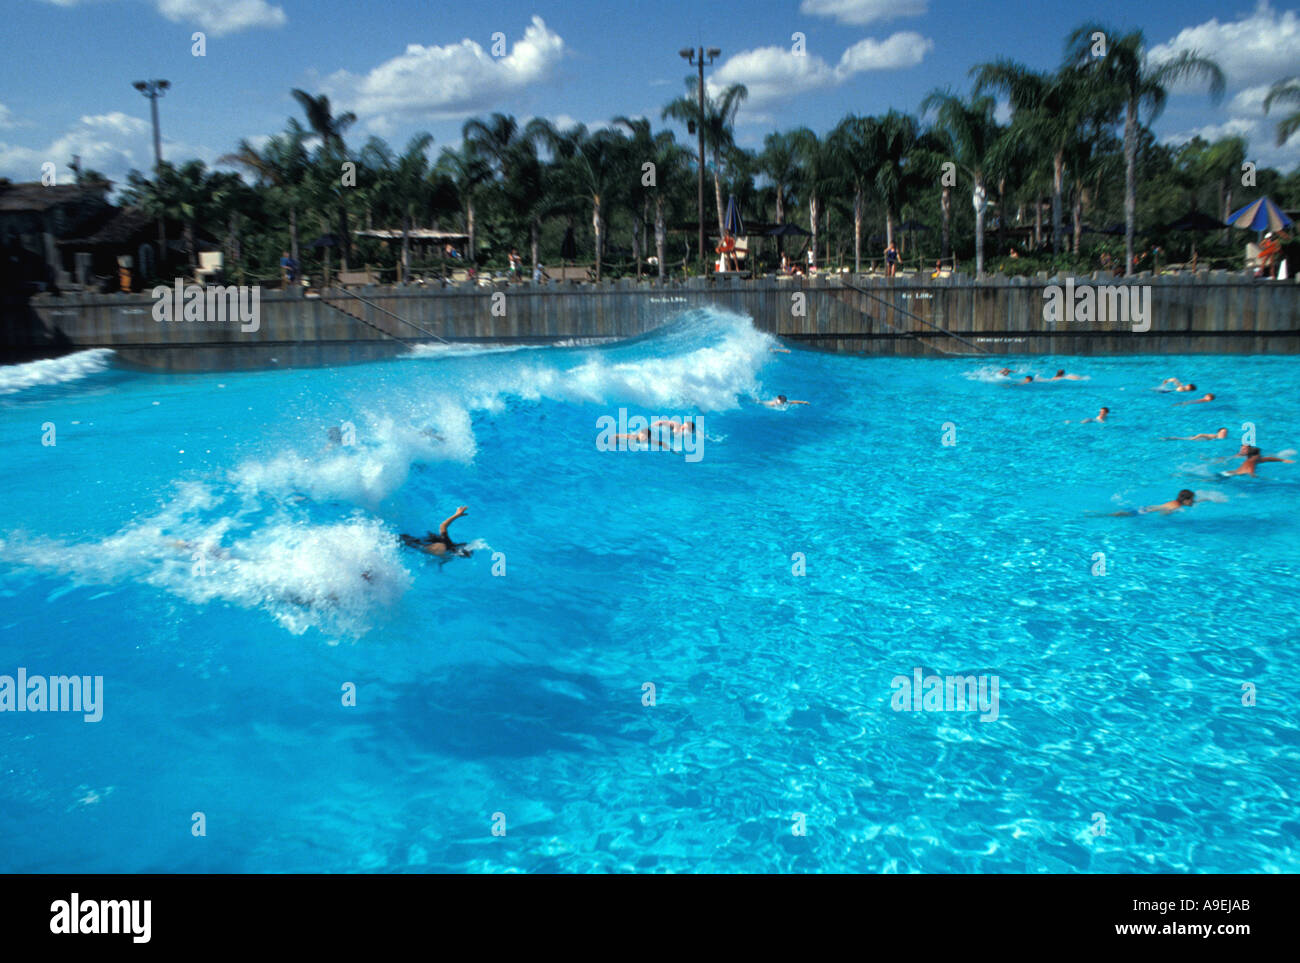 Orlando Florida USA Attractions Disney World Typhoon Lagoon Travel Tourism destination landmark Stock Photo